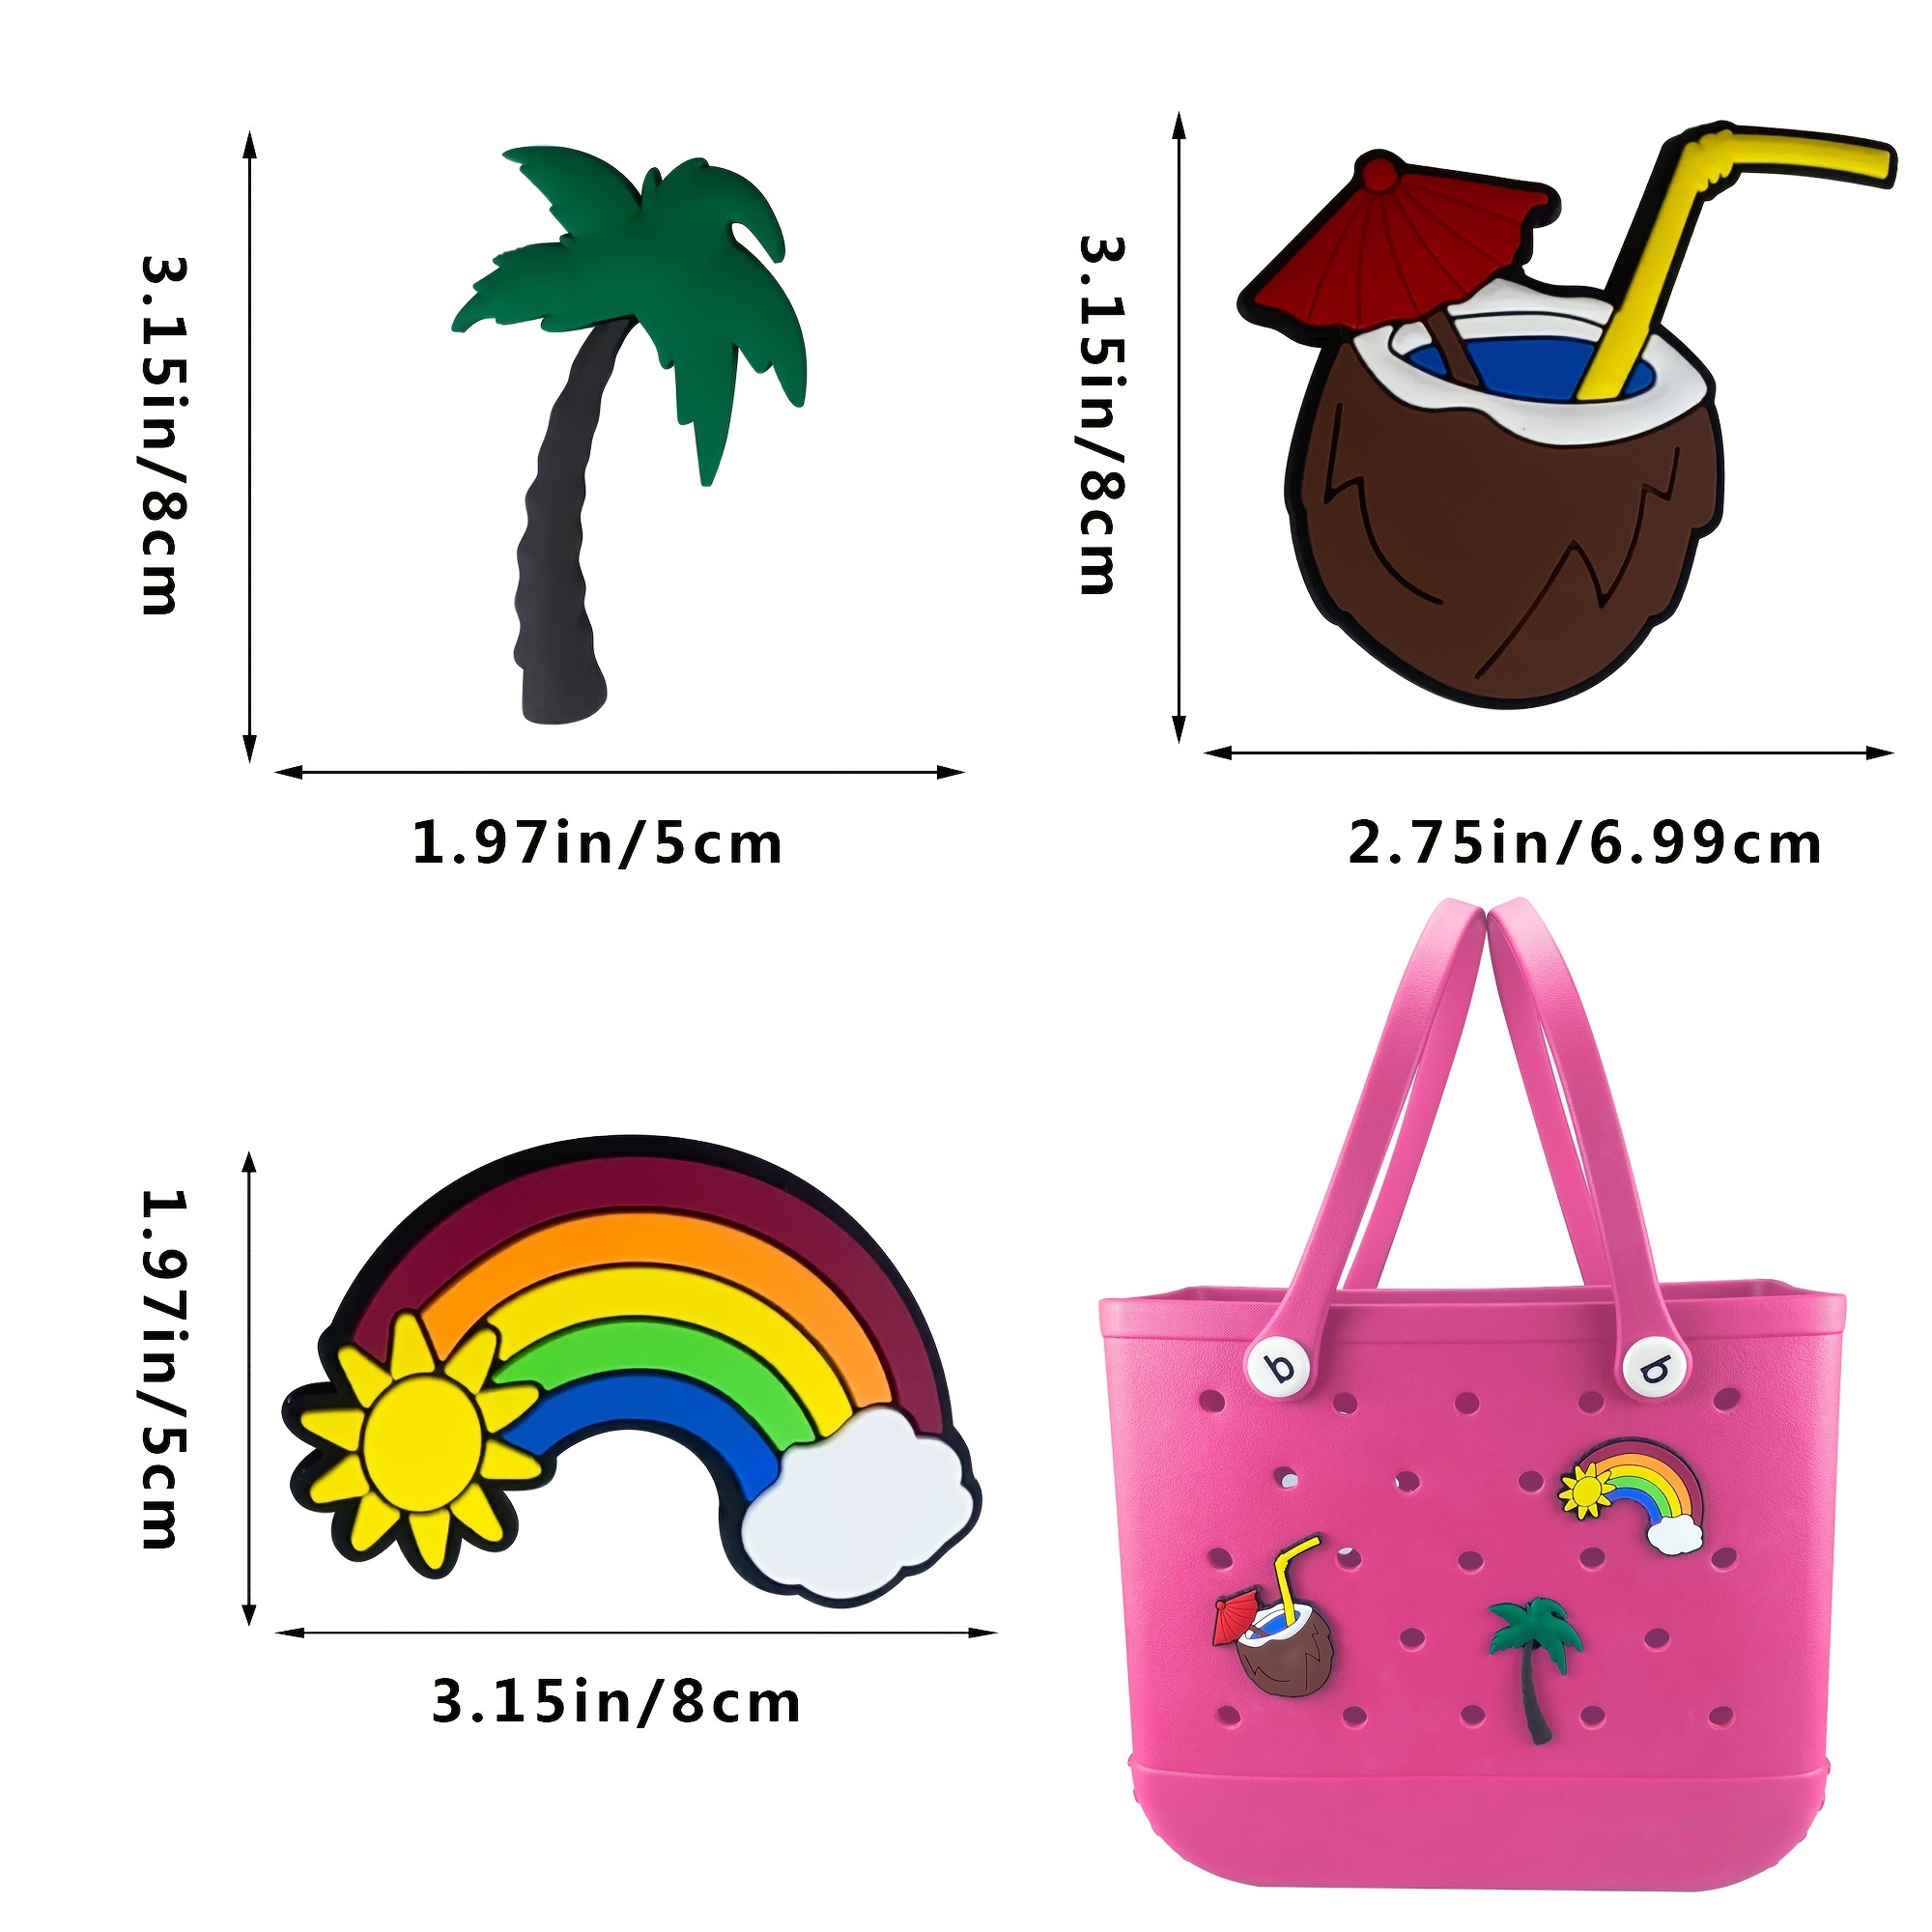 Bogg Bag Charms -   Bag charm, Bags, Cute gifts